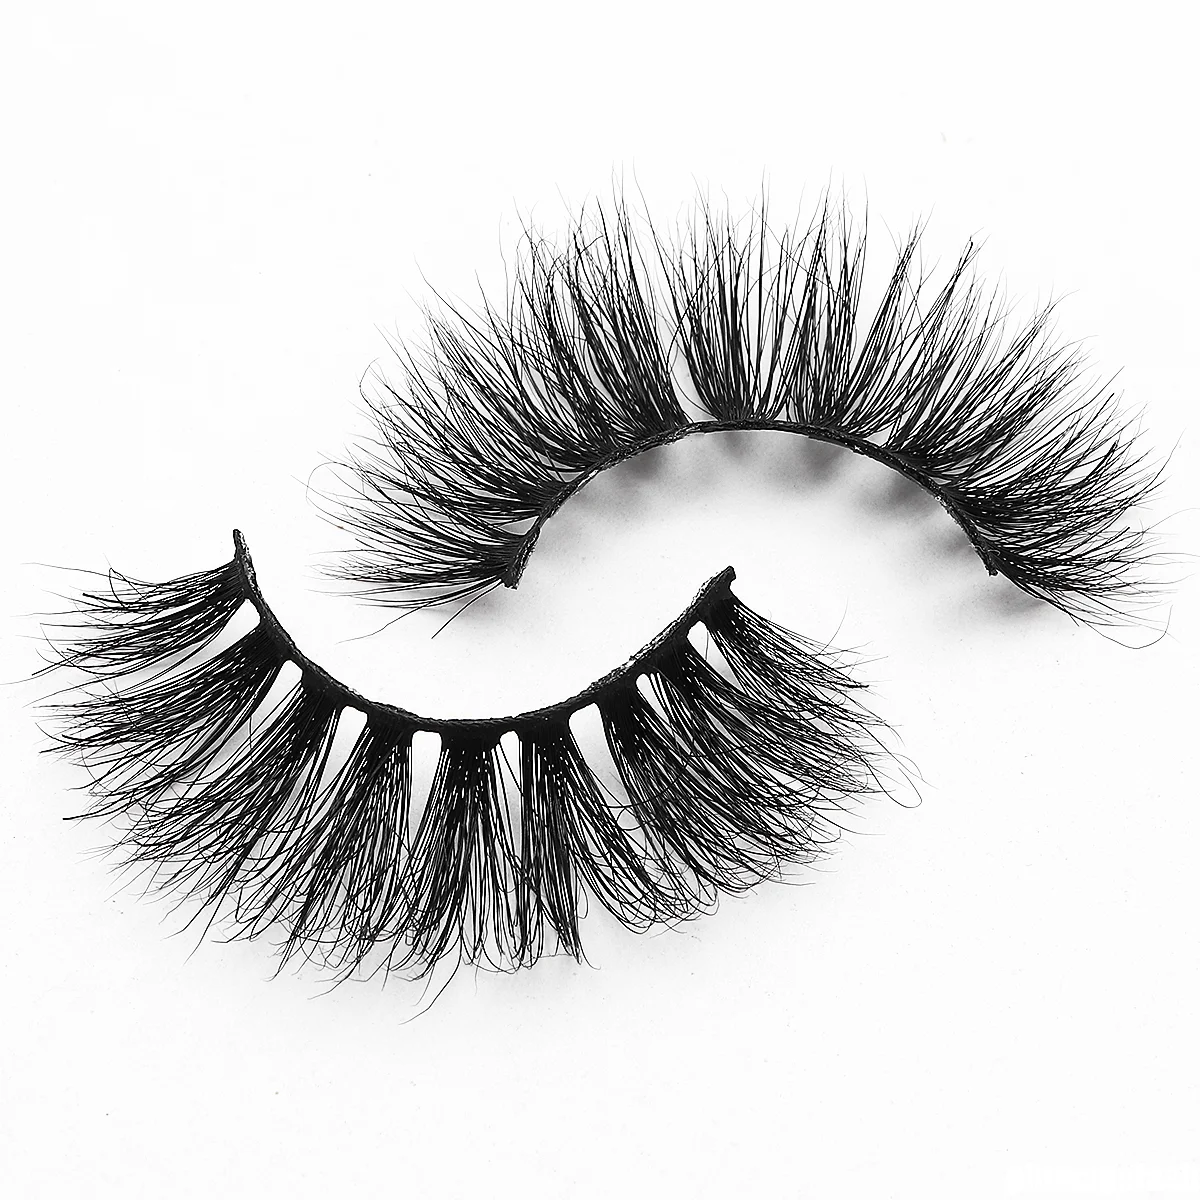 wholesale 3d mink eyelashes create your own brand eye lashes